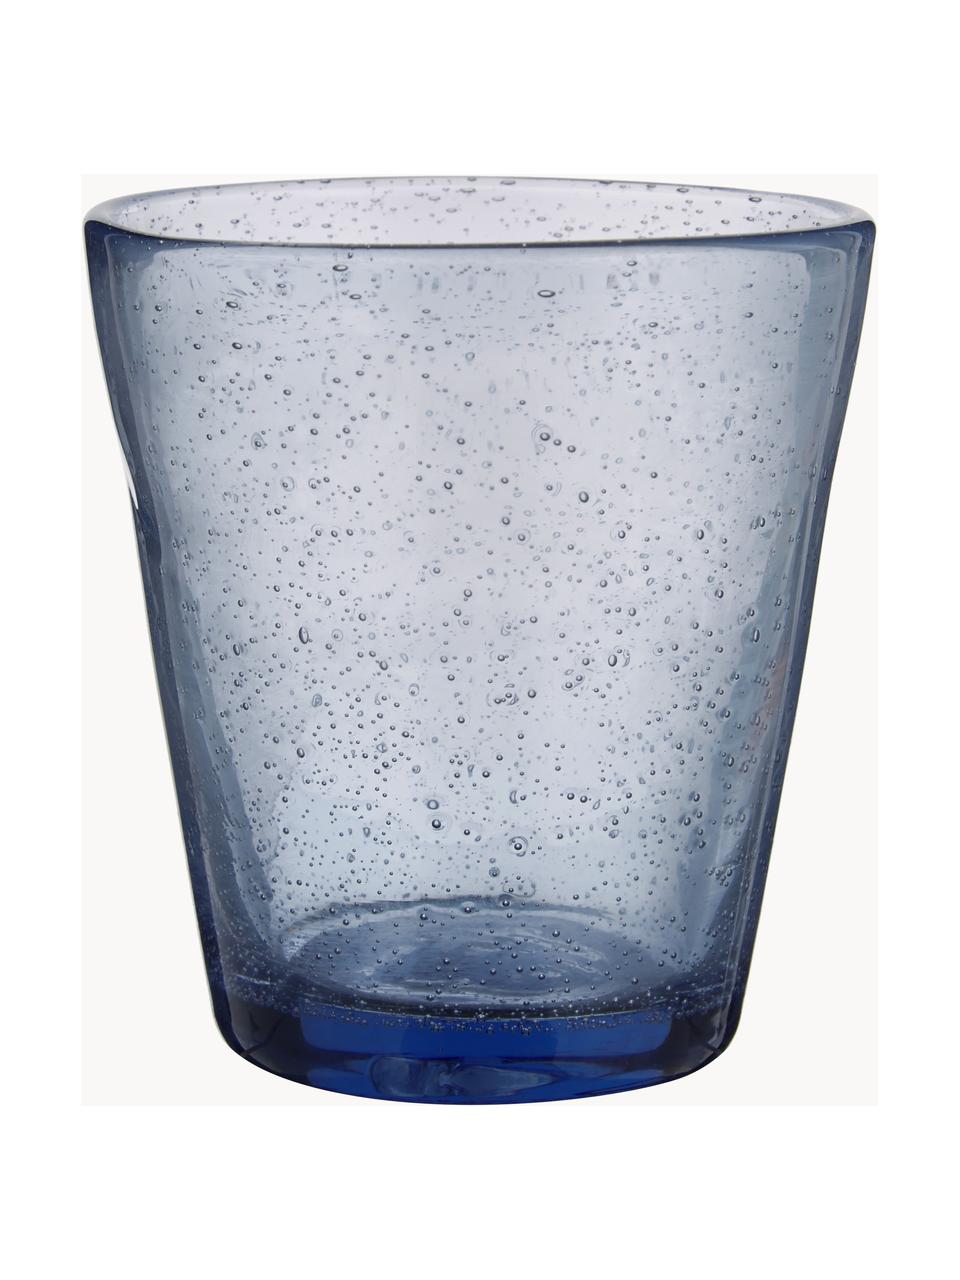 Vasos con burbujas de aire Baita, 6 uds., Vidrio, Tonos azules, tuquesas y grises transparentes, Ø 9 x Al 10cm, 330 ml